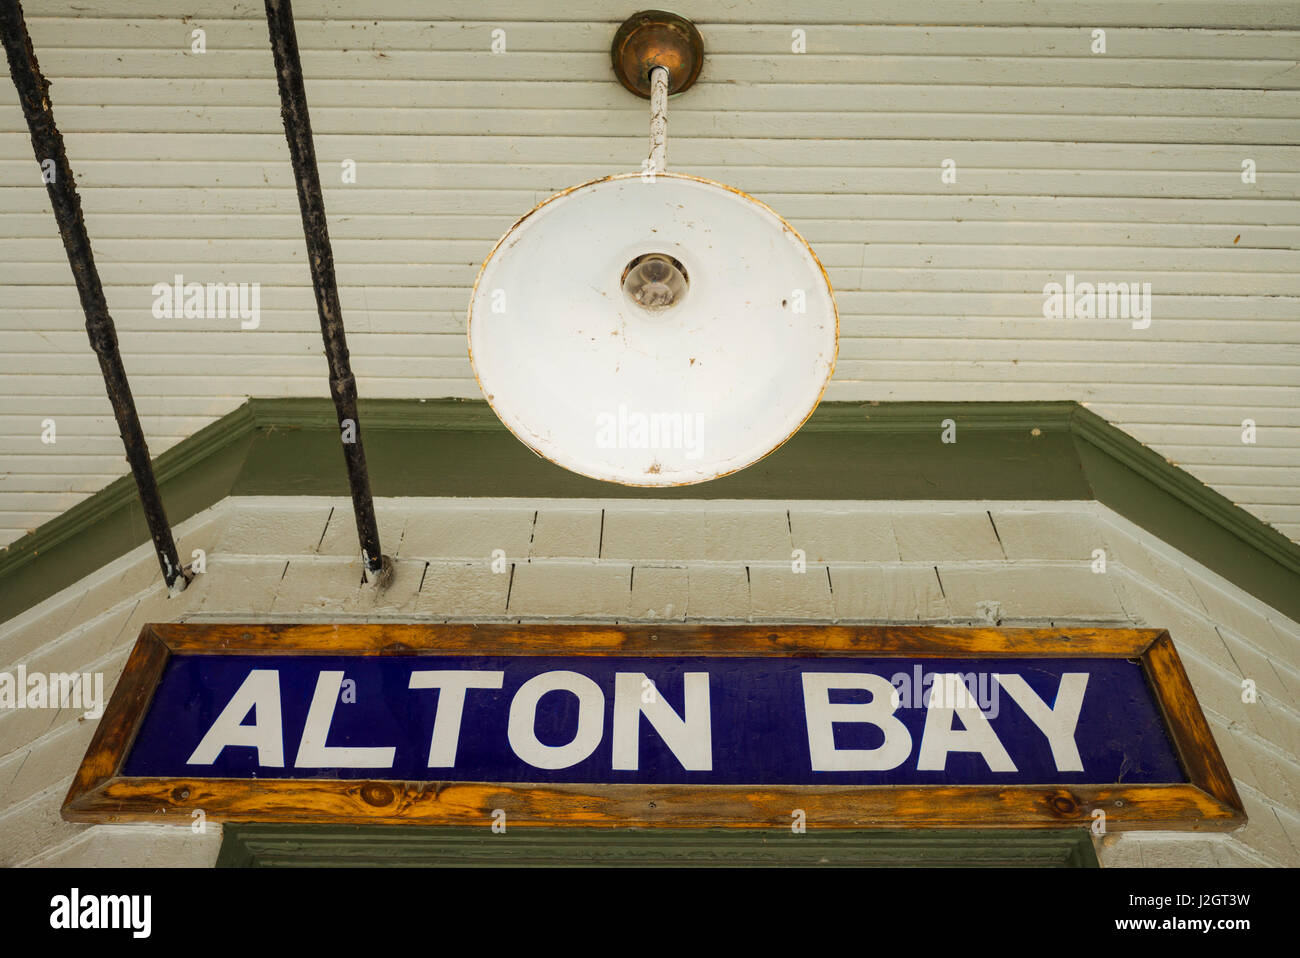 USA, New Hampshire, Lake Winnipesaukee, Alton Bay, sign at former train station Stock Photo